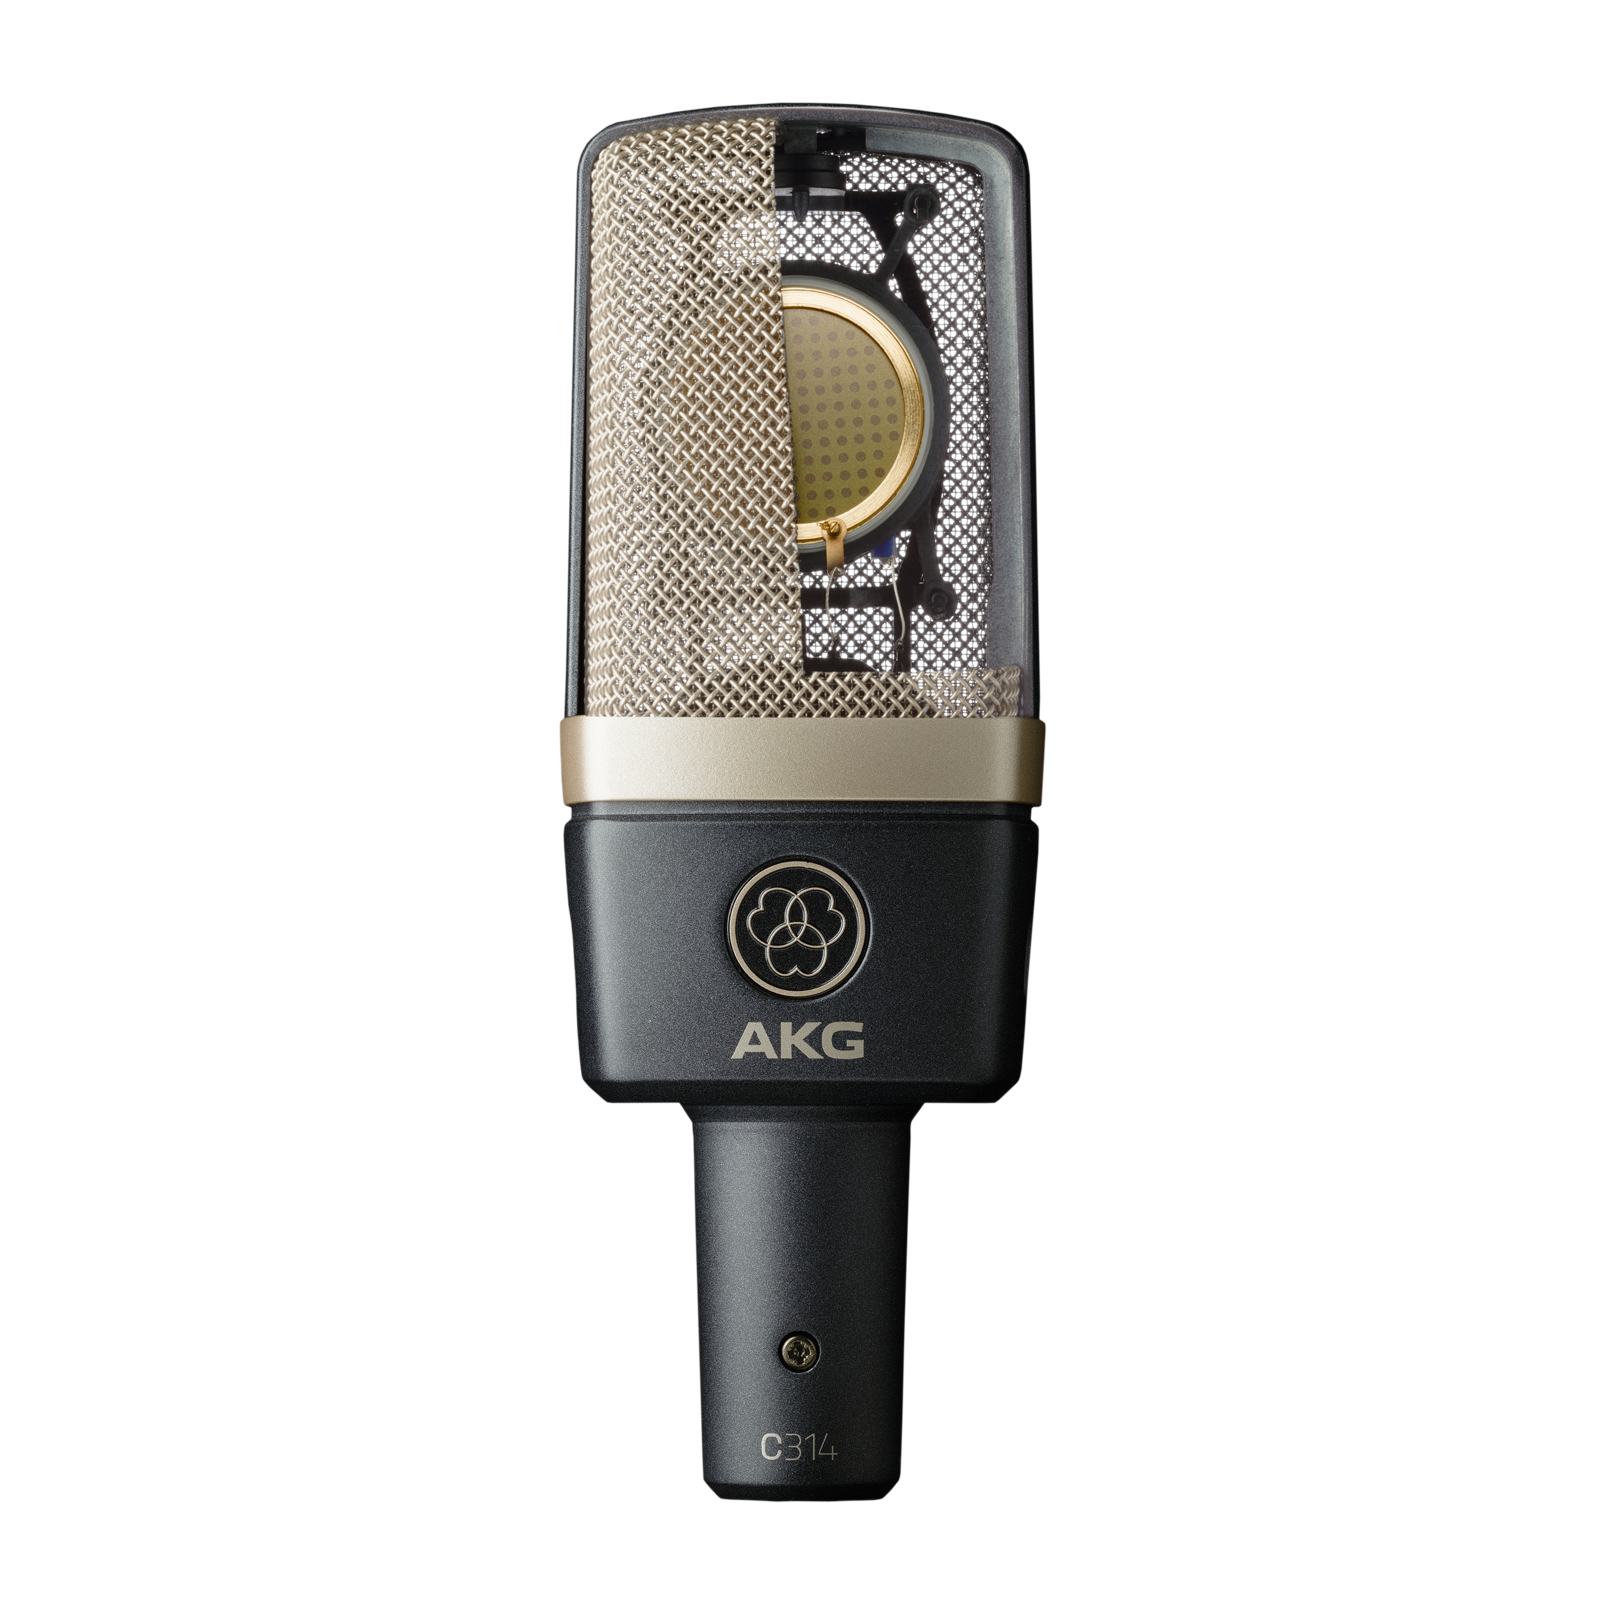 C314 - Black - Professional multi-pattern condenser microphone - Detailshot 1